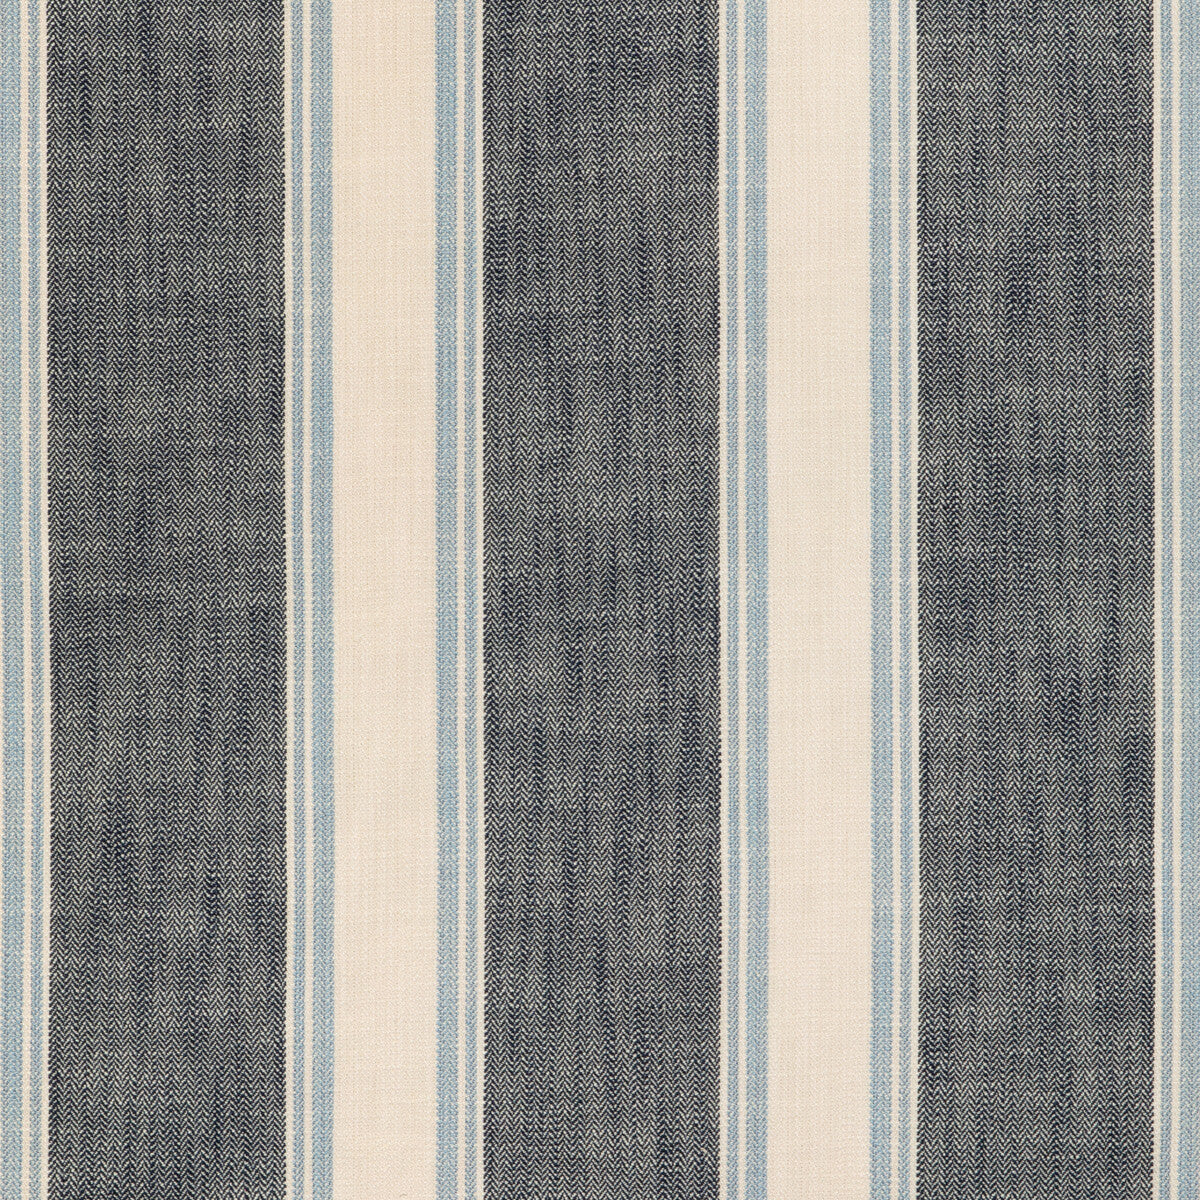 La Riviera Stripe fabric in blue color - pattern 8024120.55.0 - by Brunschwig &amp; Fils in the Les Ensembliers L&